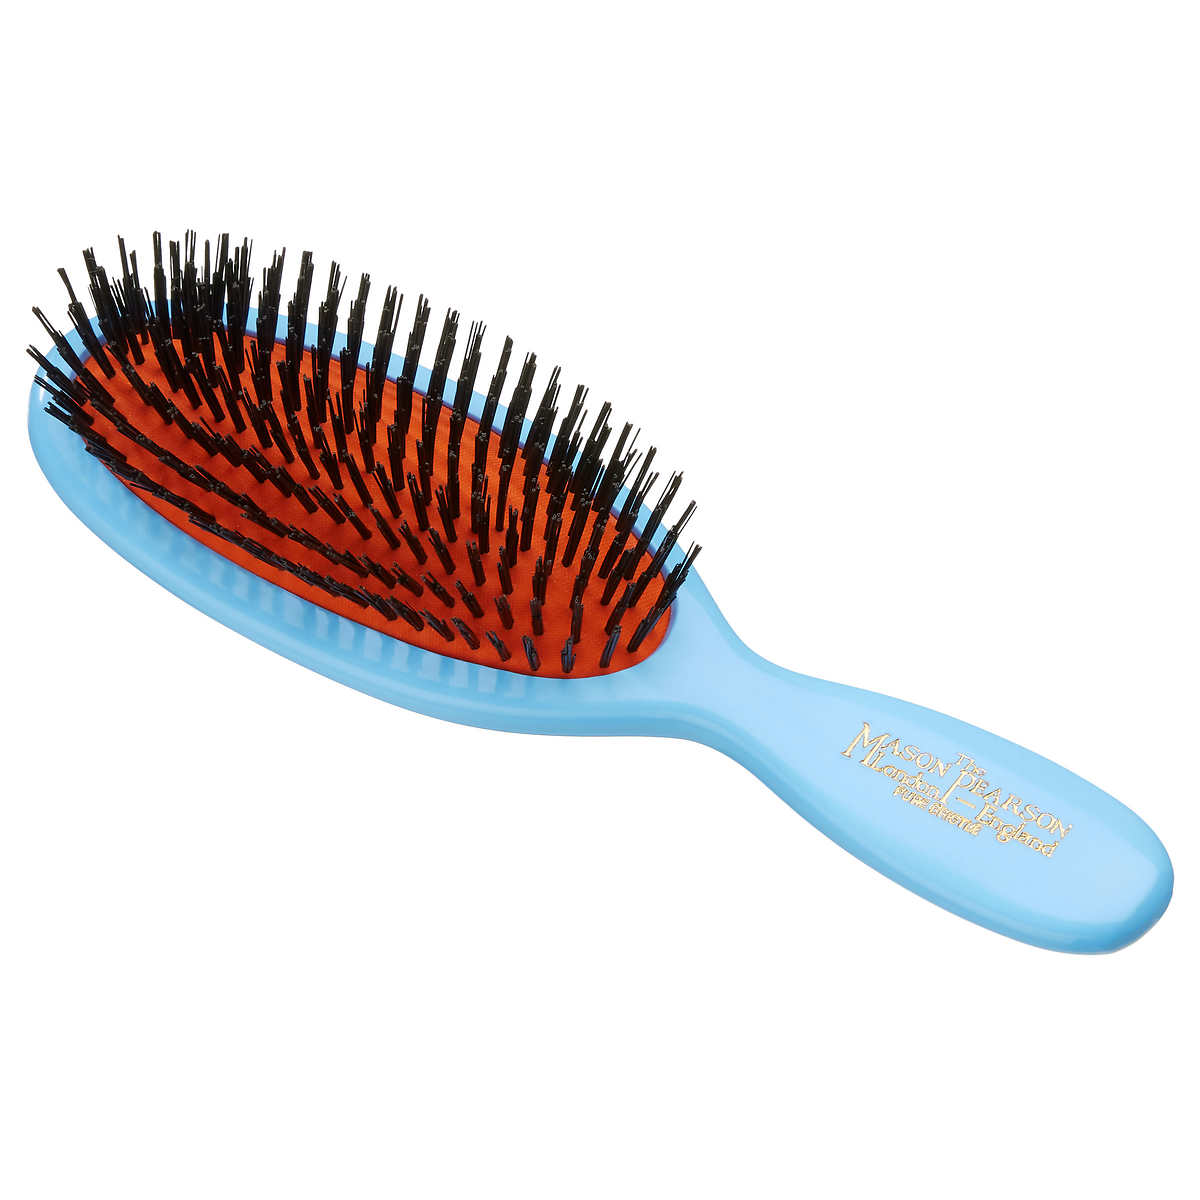 Mason Pearson – Cleaning Brush – Merchant & Rhoades